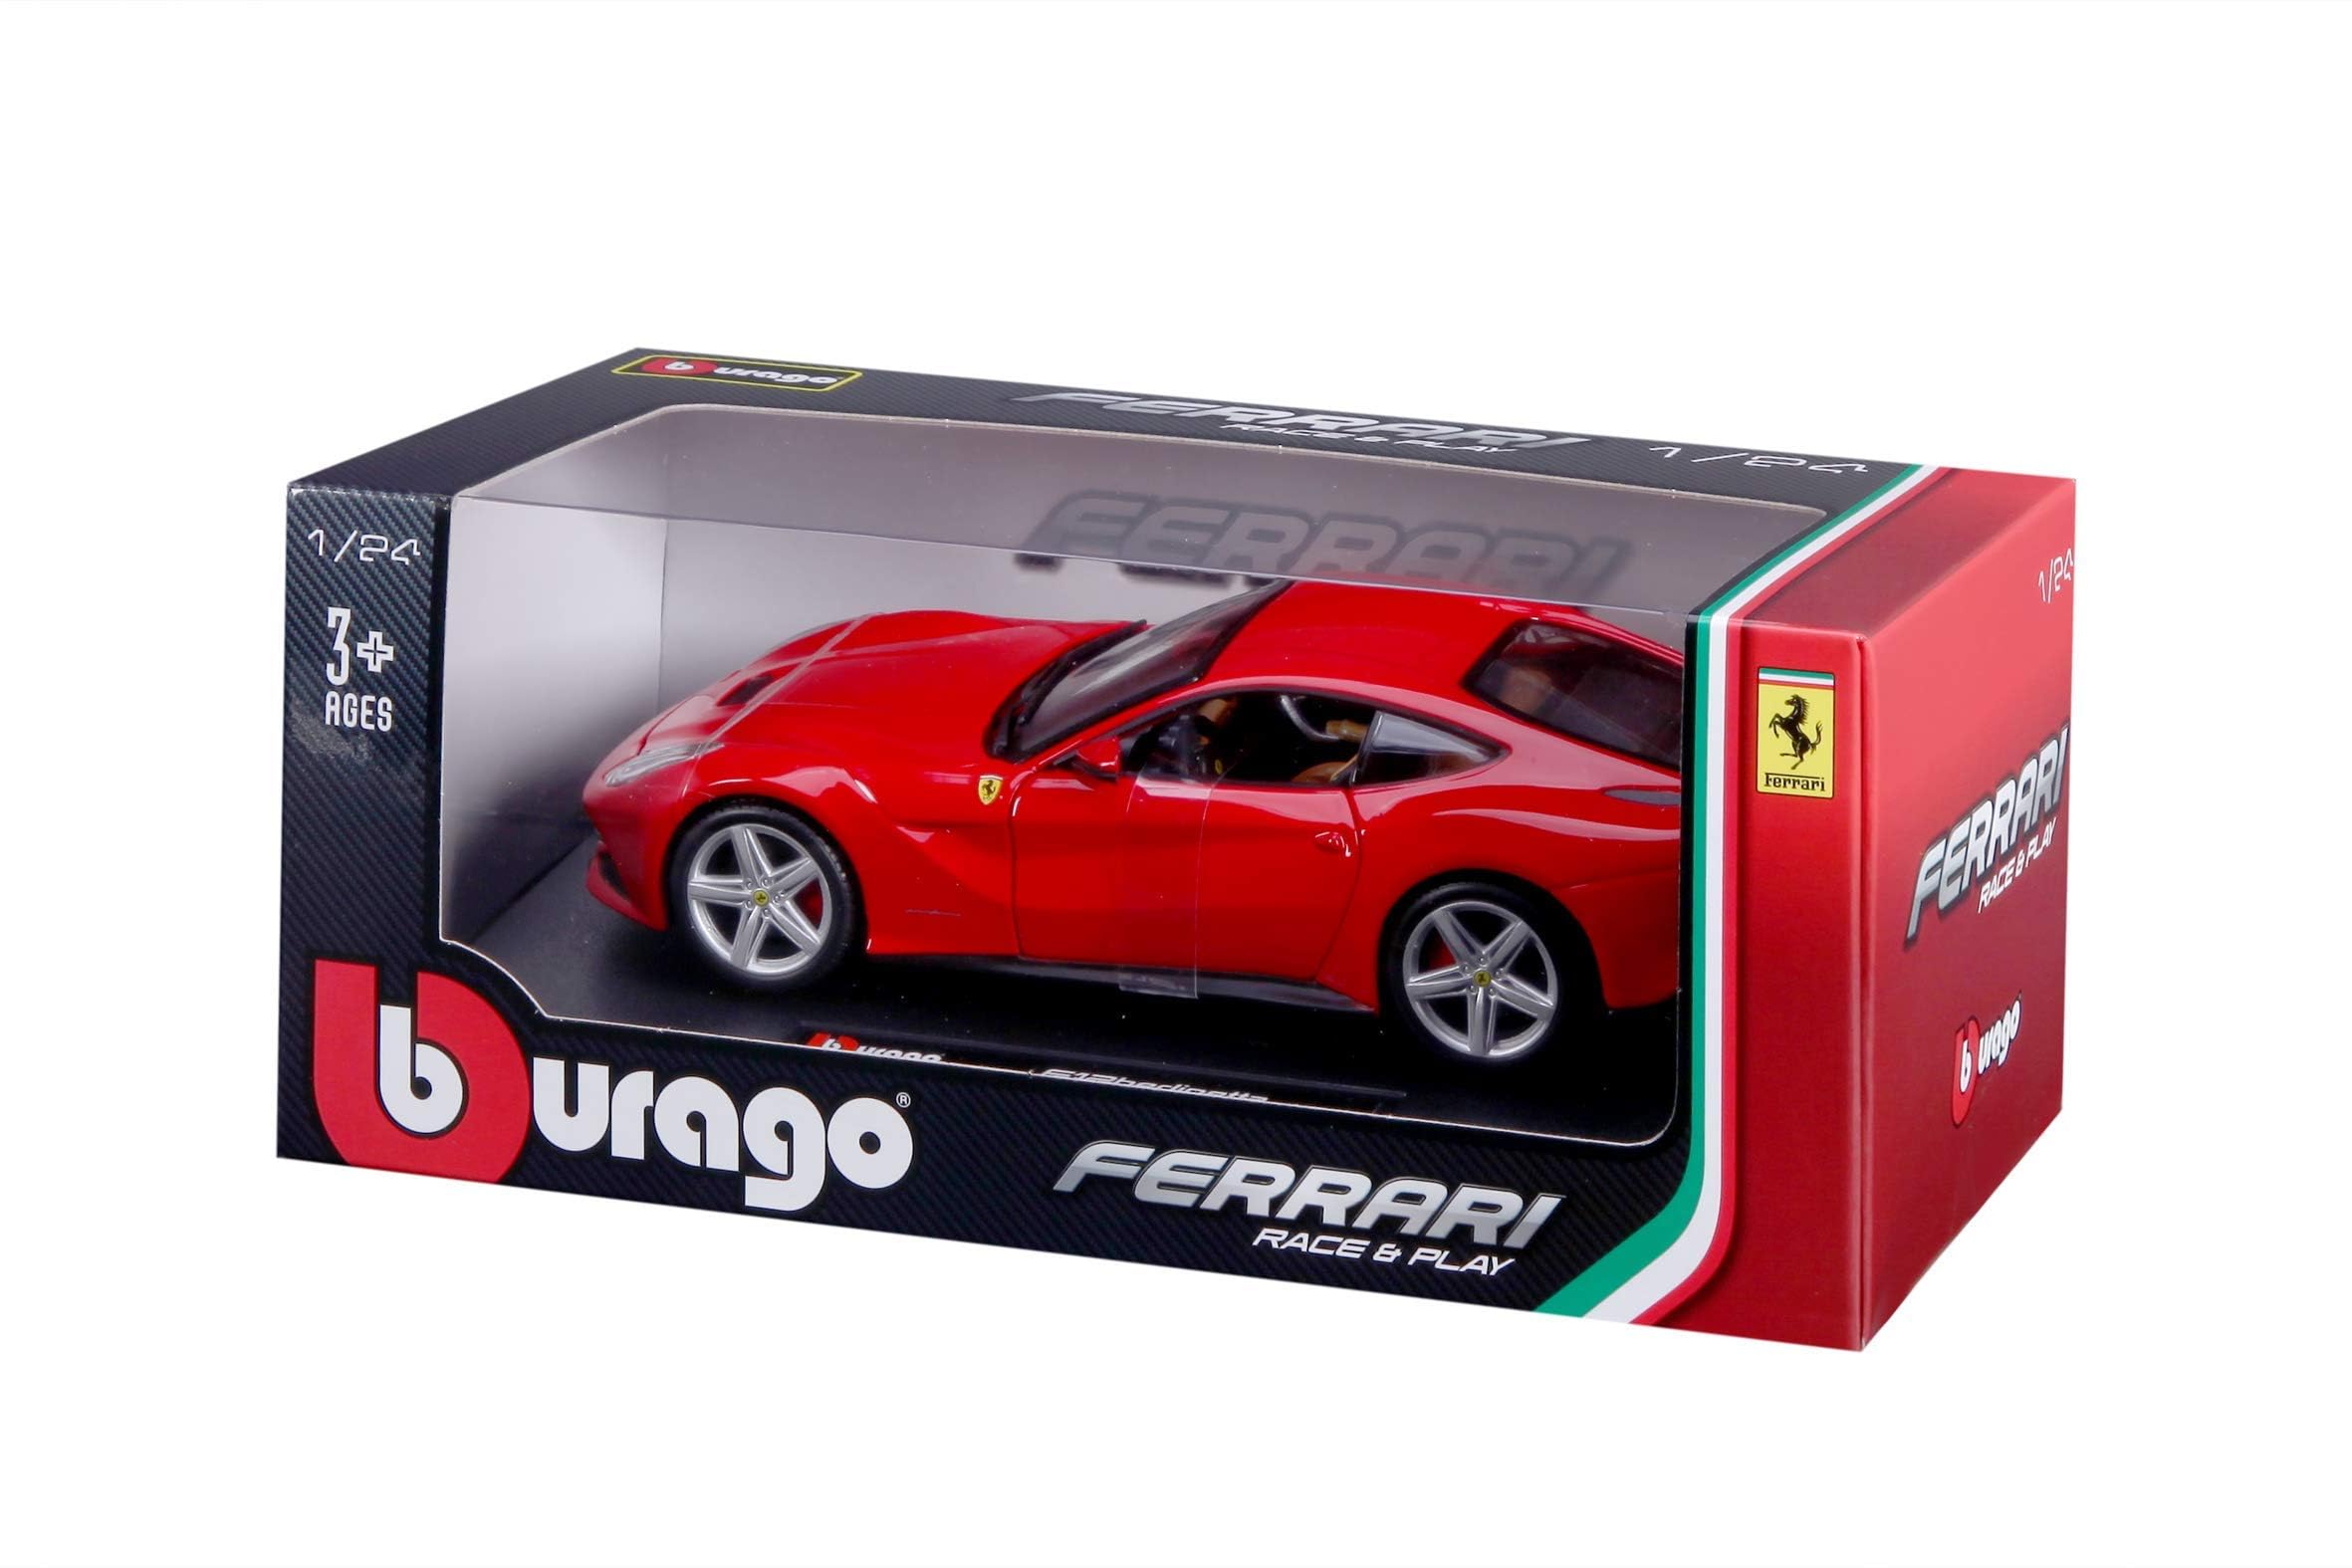 BBurago Maisto France - 26007 - Véhicule miniature - Ferrari F12 Berlinetta - Échelle 1/24 - Couleur aléatoire